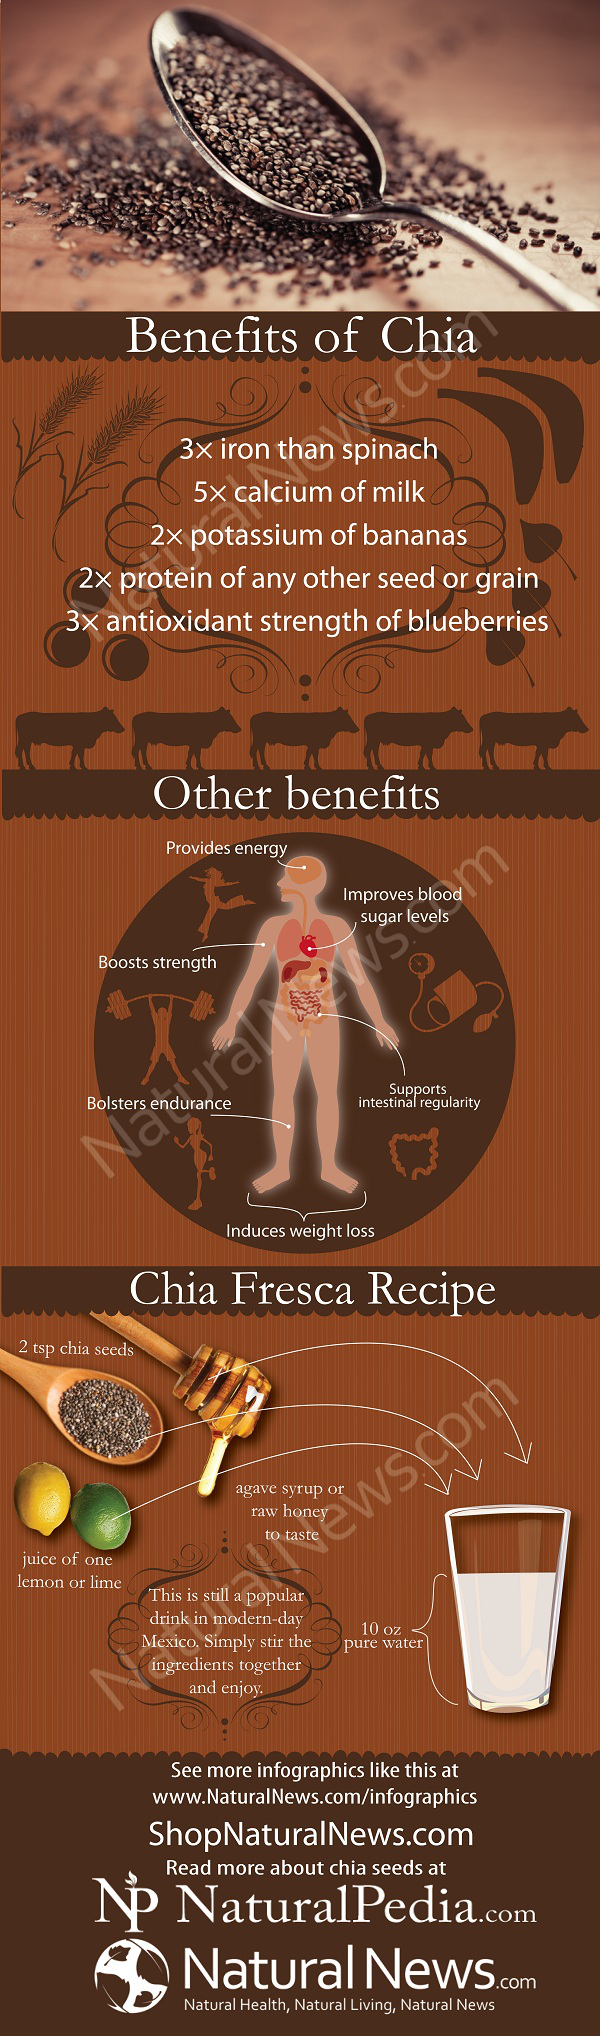 Benefits of Chia